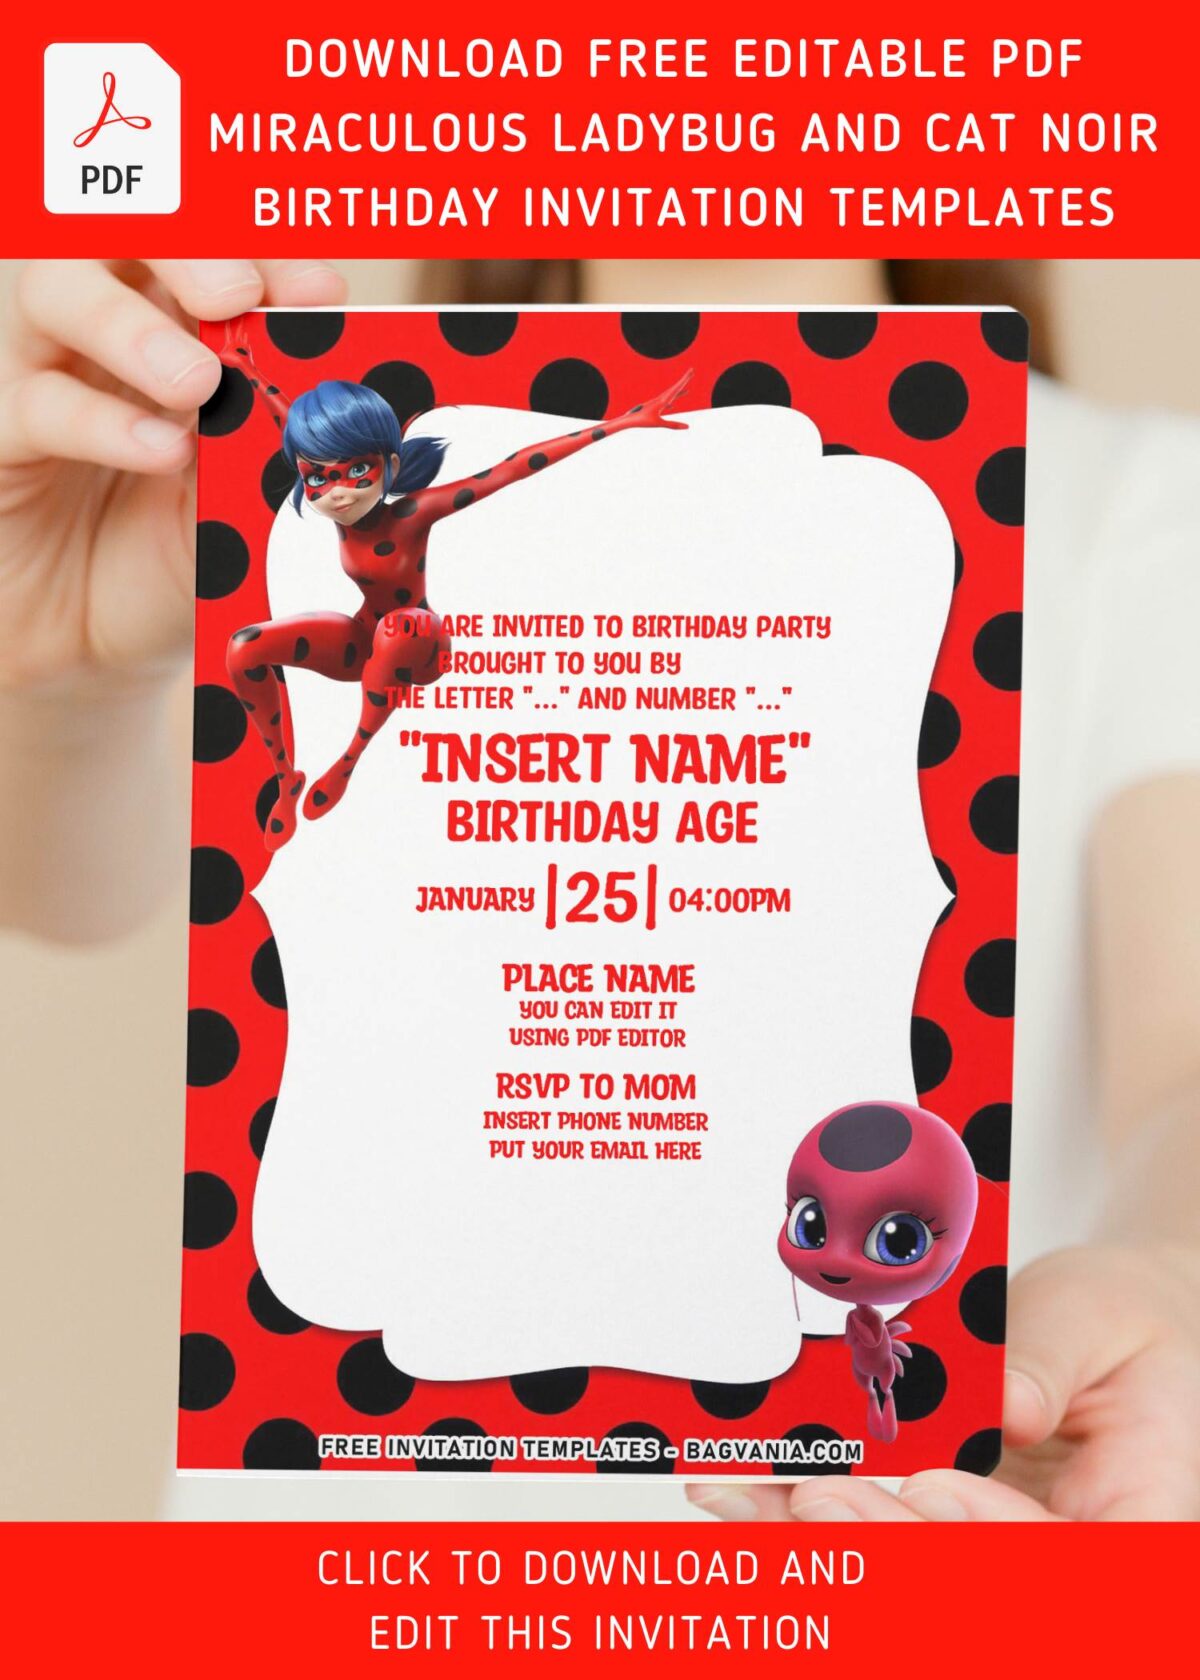 (Free Editable PDF) Super-Hero Ladybug And Cat Noir Birthday Invitation Templates with editable text